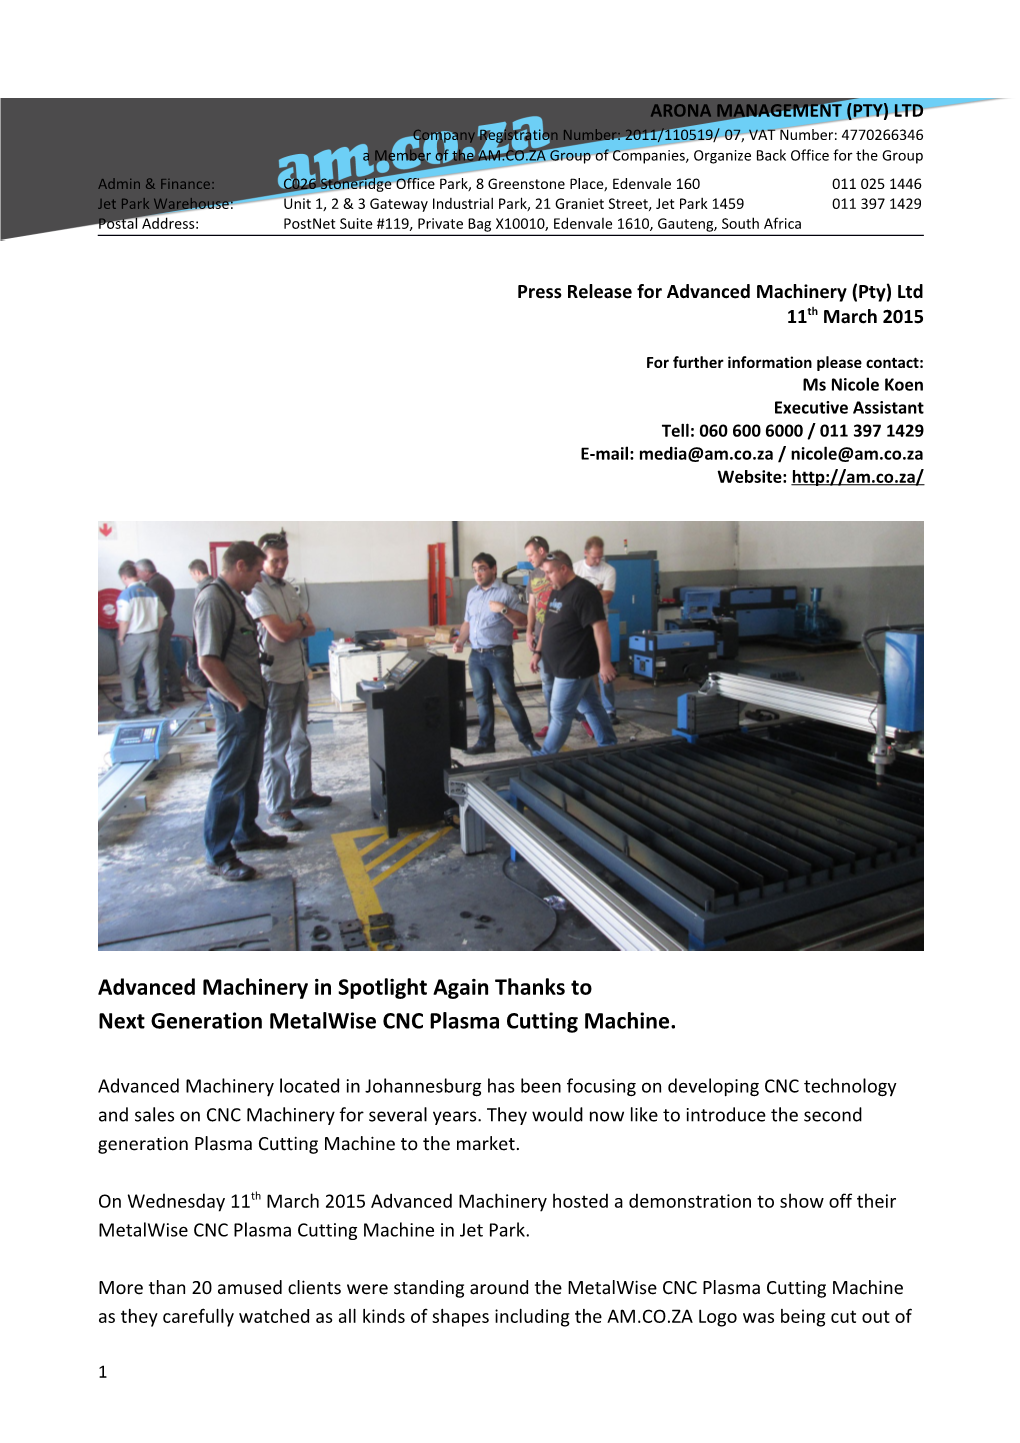 Press Release for Advanced Machinery (Pty) Ltd